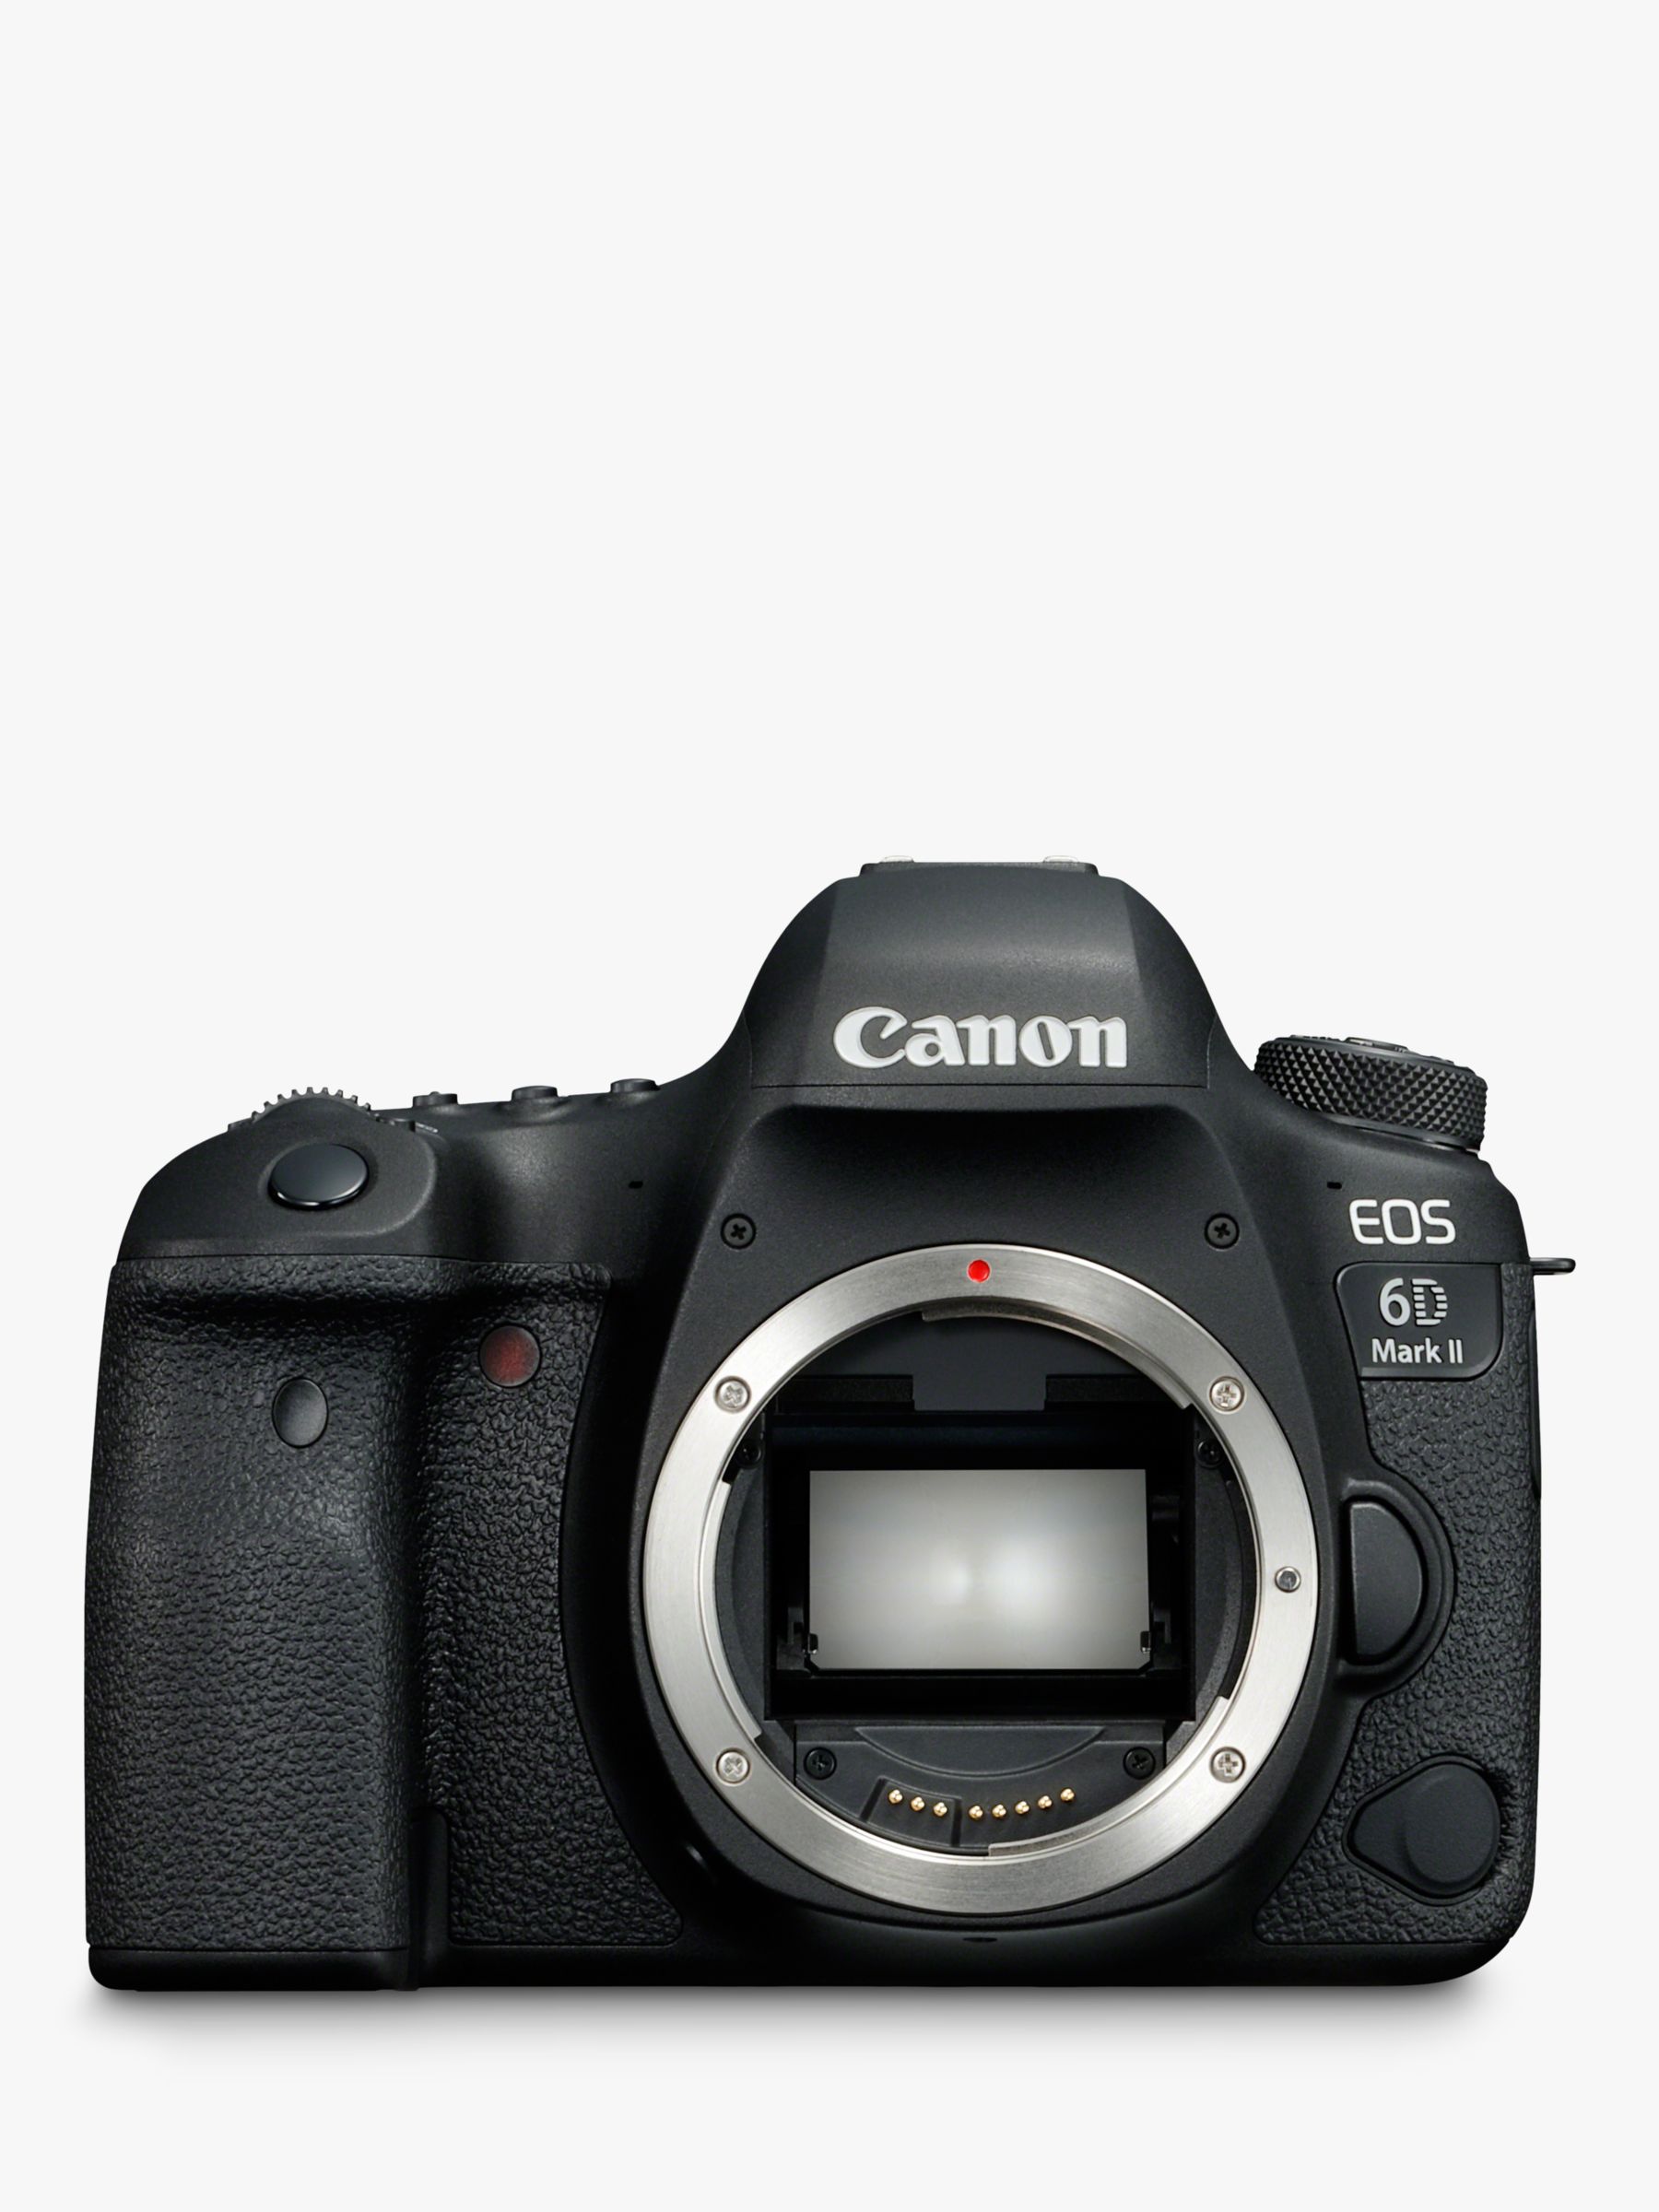 Canon EOS 6D MK II Digital SLR Camera, GPS, 1080p Full HD, 26.2MP, Wi-Fi, Bluetooth, NFC, 3 Vari-angle Touch Screen, Body Only